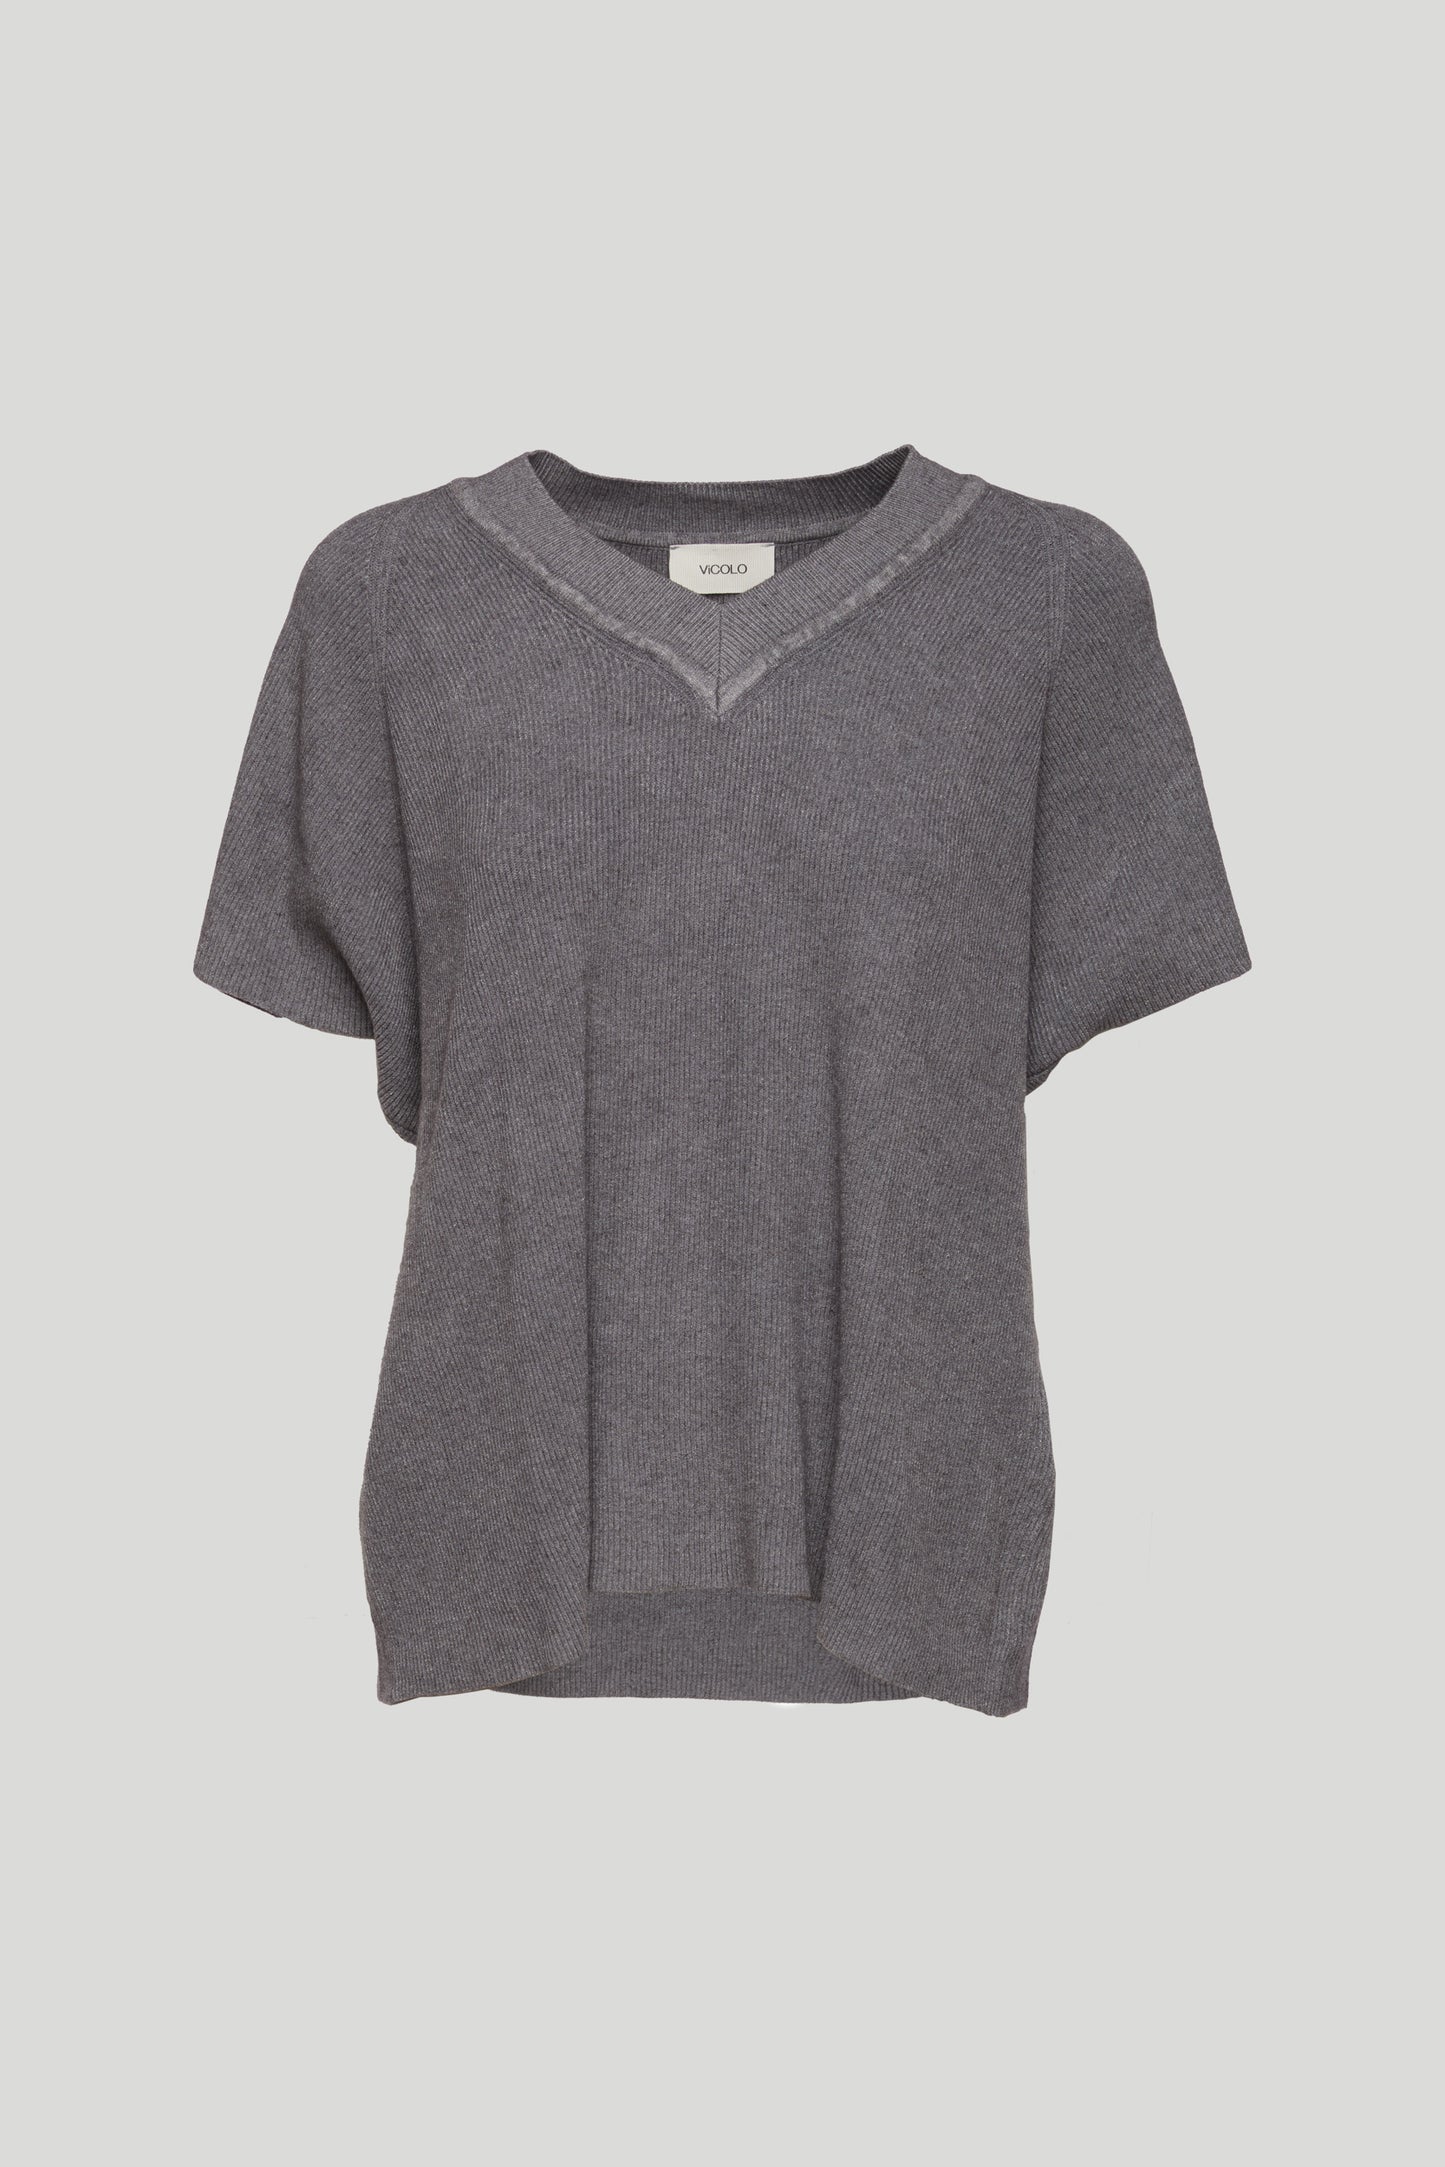 VICOLO Gray Short Sleeved Shirt